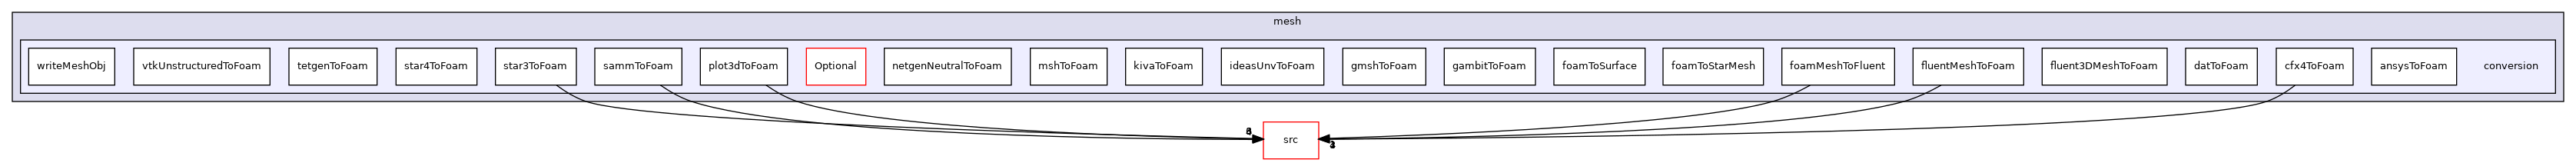 applications/utilities/mesh/conversion